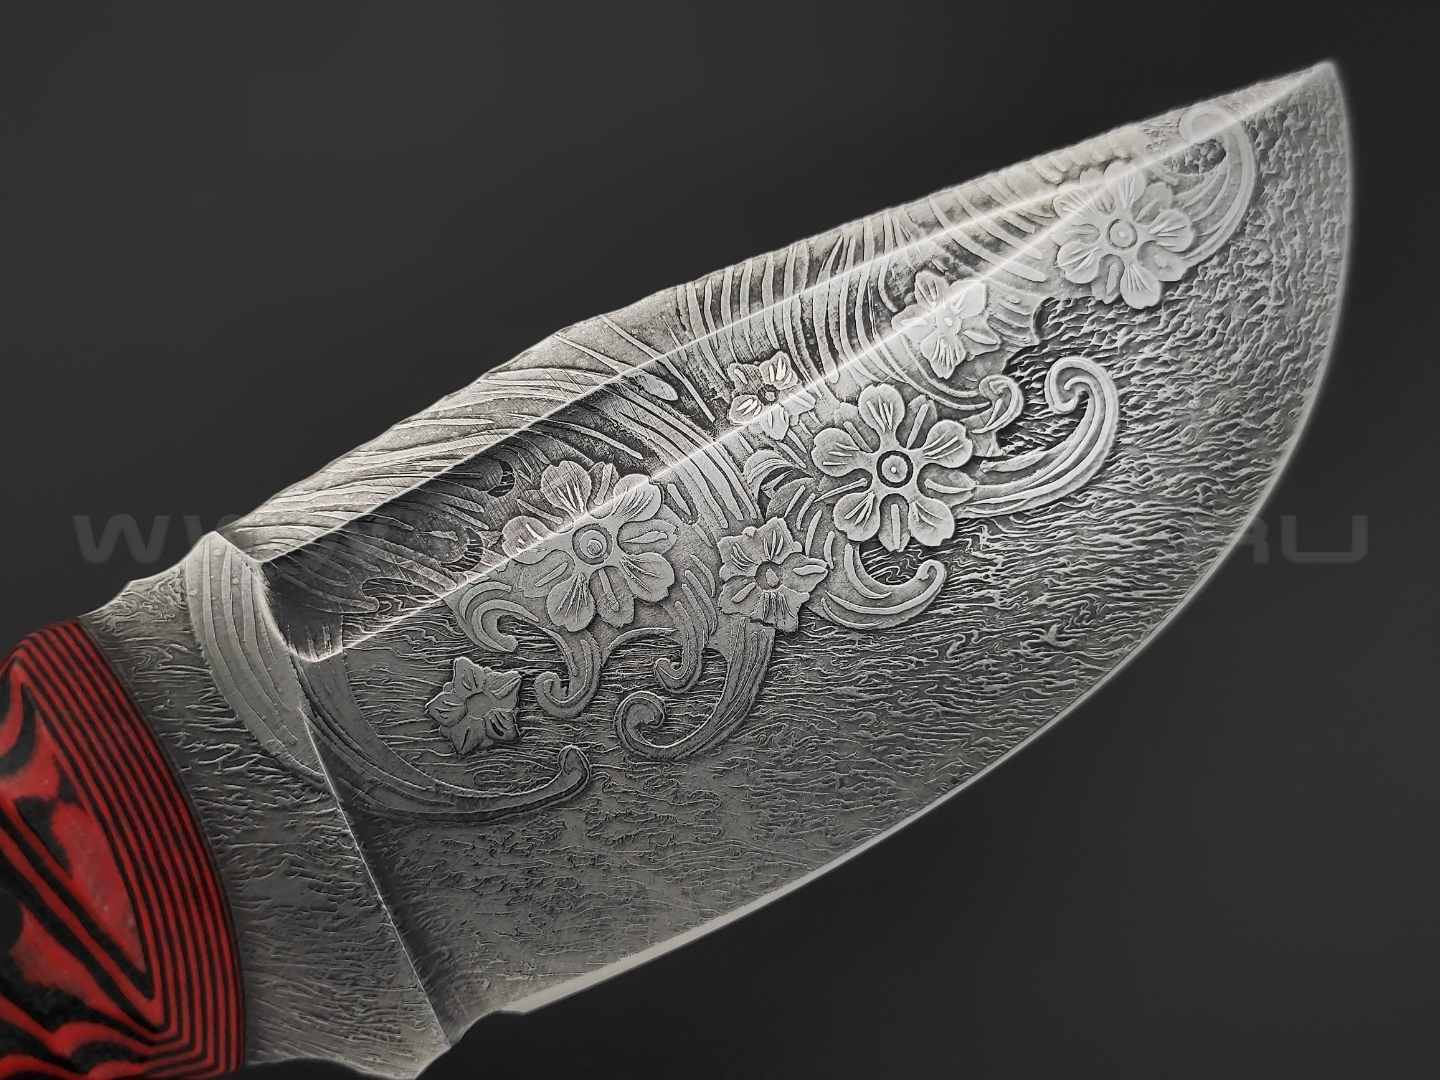 Волчий Век нож Fantocci Custom Koi сталь PGK WA, рукоять G10 black & red